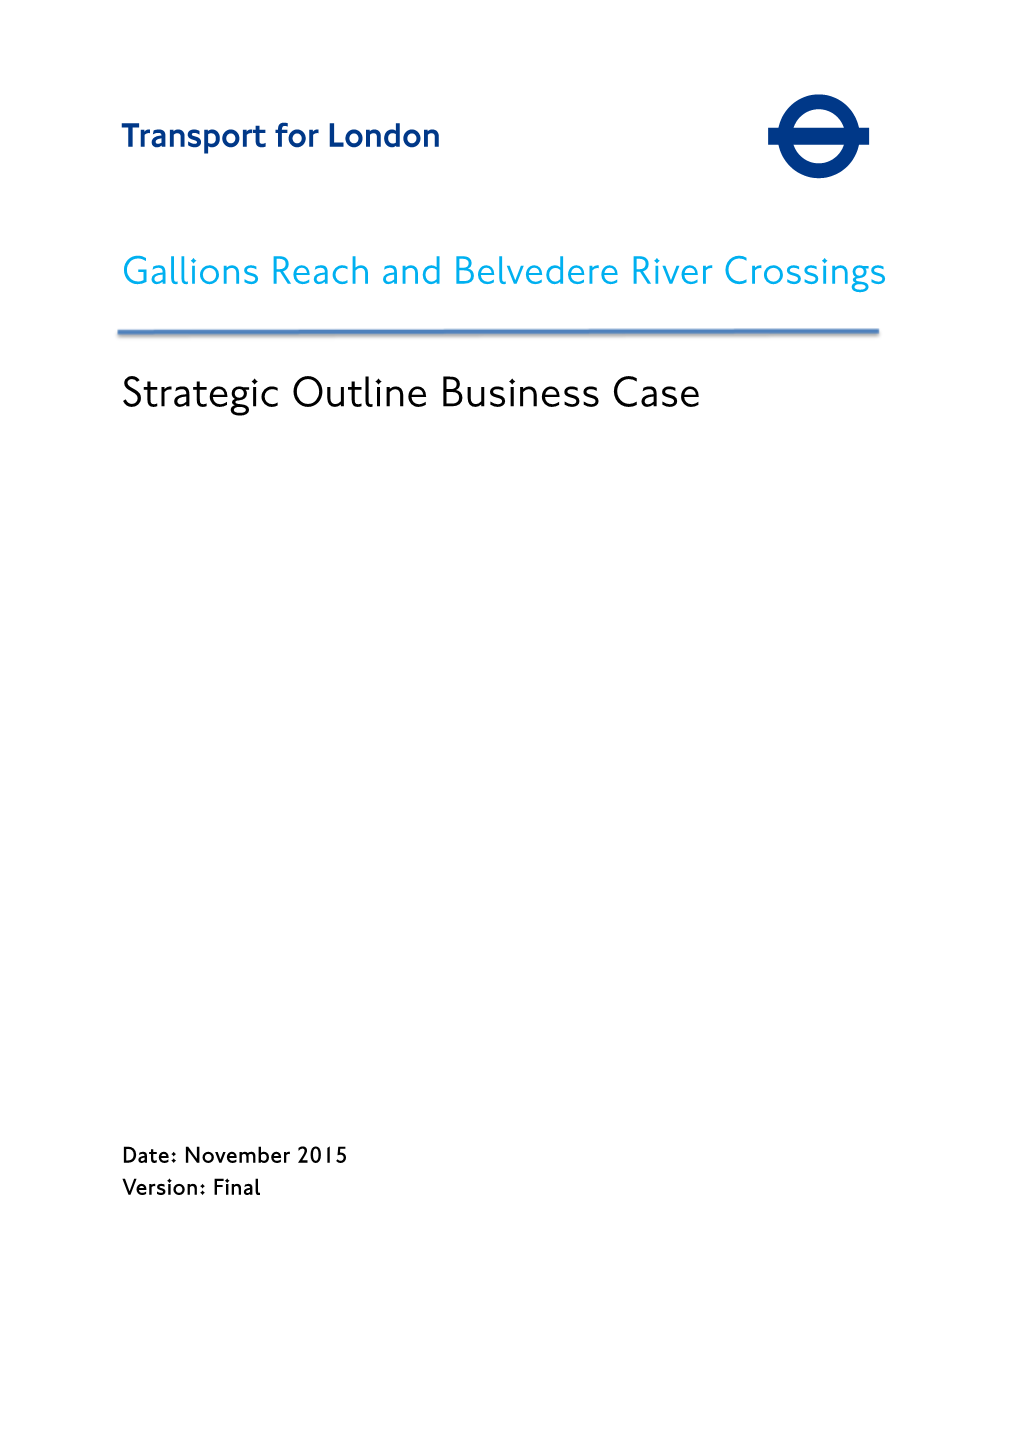 Strategic Outline Business Case